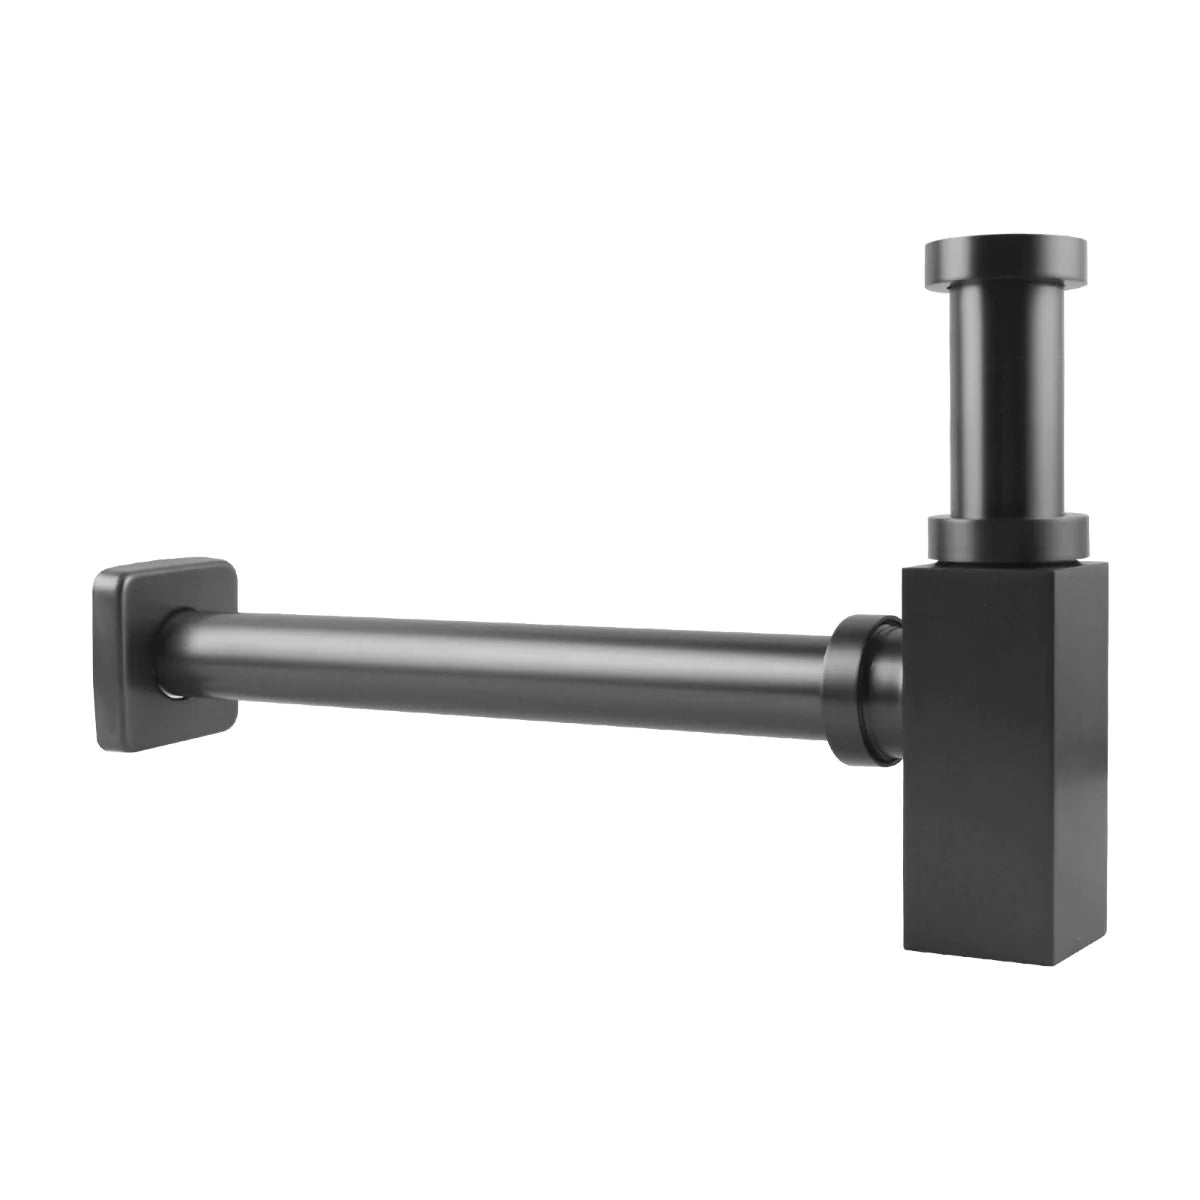 Basin Bottle Trap 32mm: Plumbing Essential for Sink Drainage-Gun Metal Grey-GM001.BT